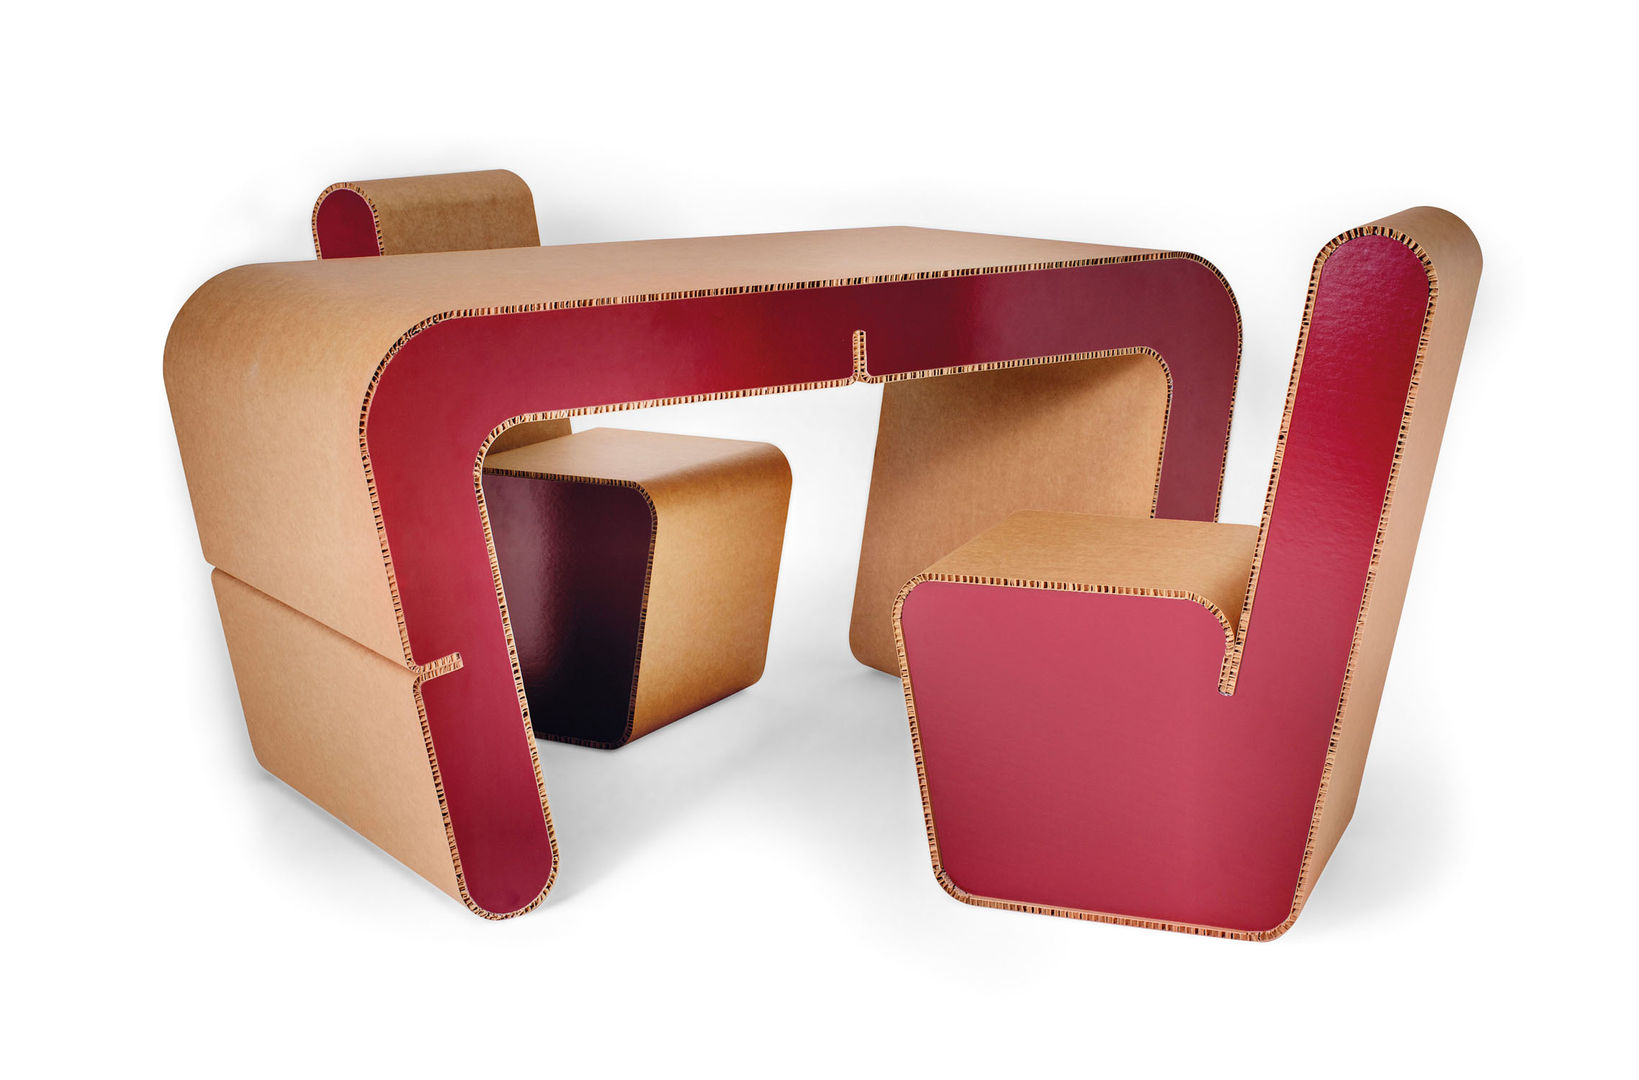 Snake Collection, Origami Furniture Origami Furniture Study/office Desks